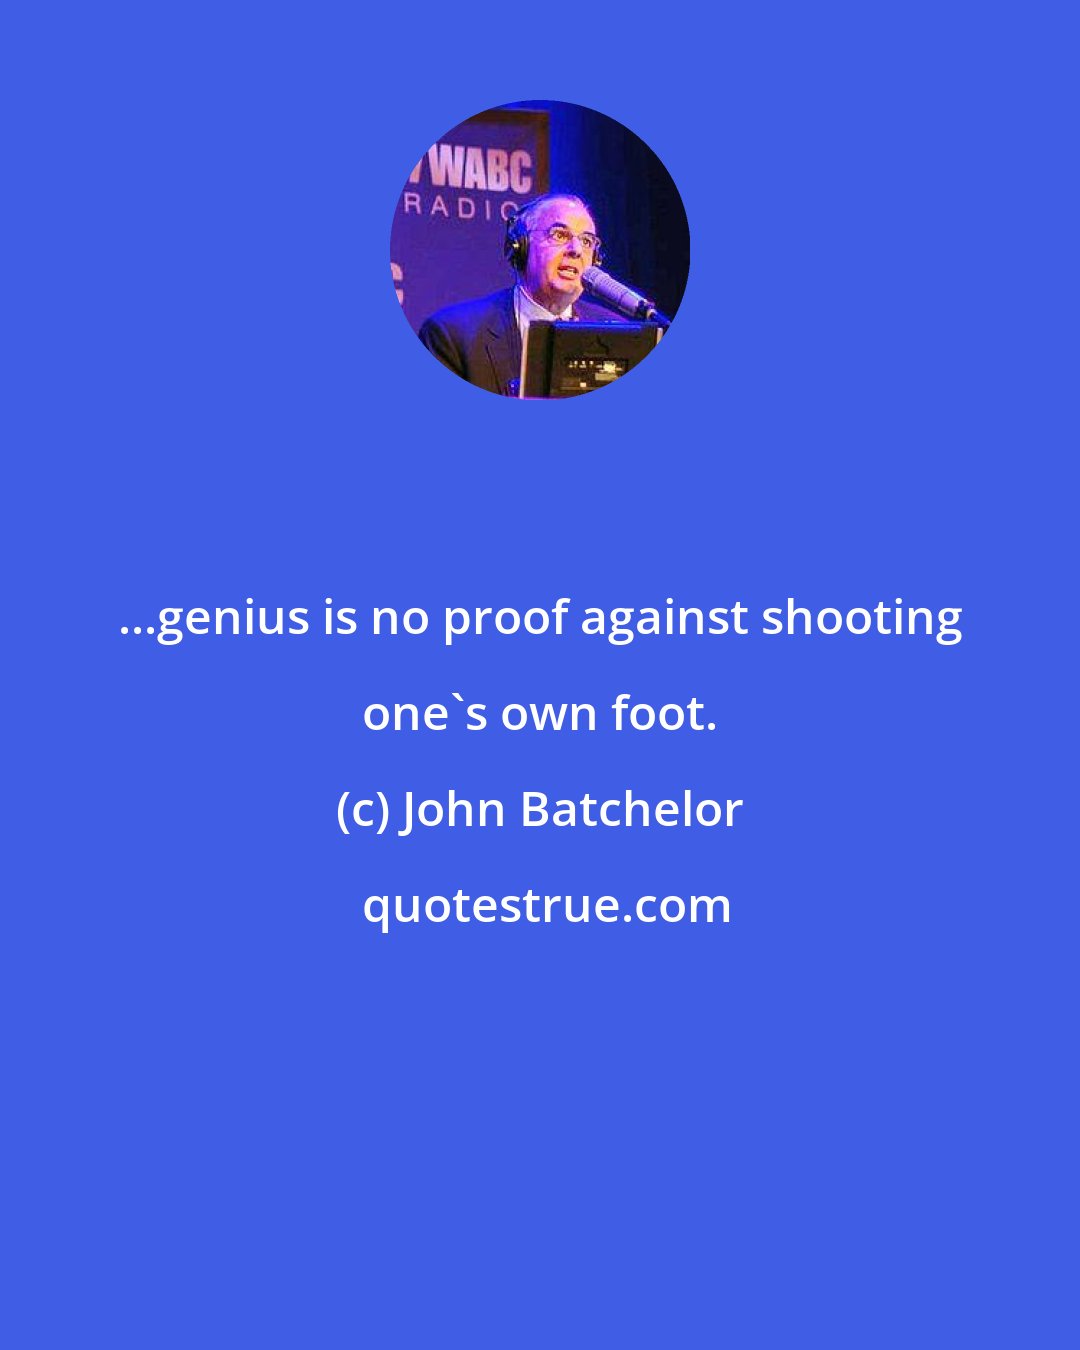 John Batchelor: ...genius is no proof against shooting one's own foot.